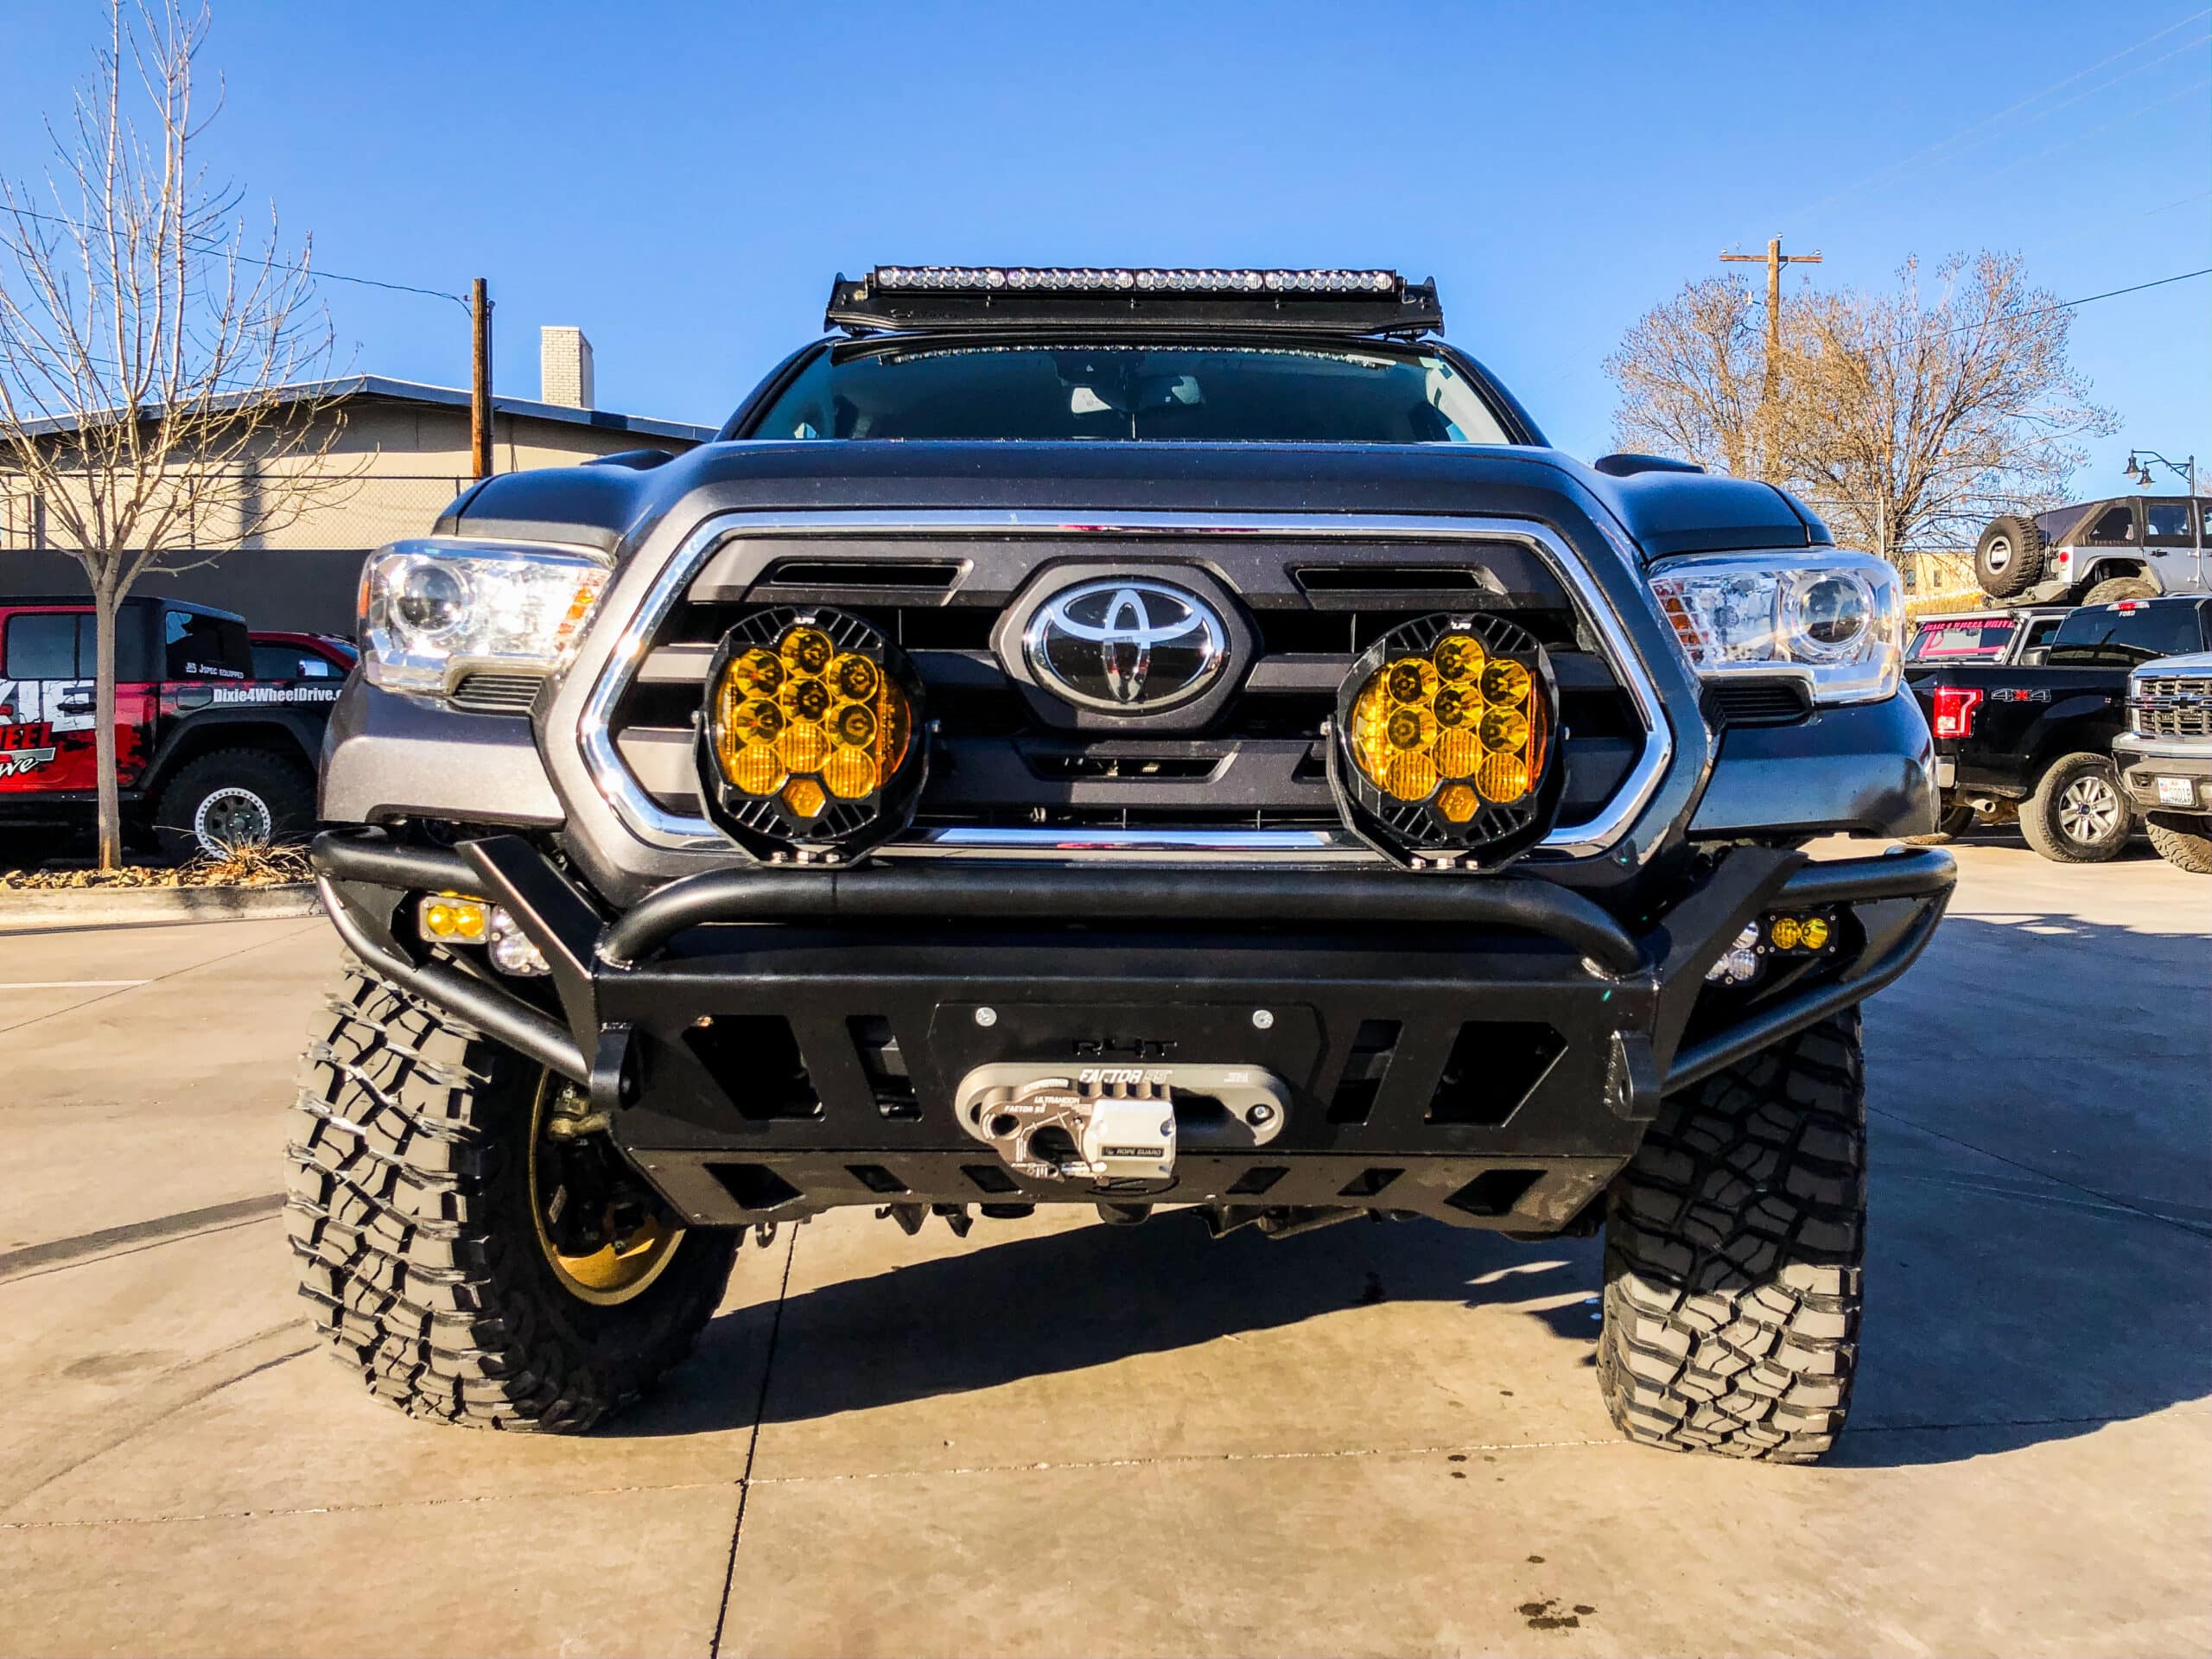 Steve’s 2019 Toyota Tacoma Build